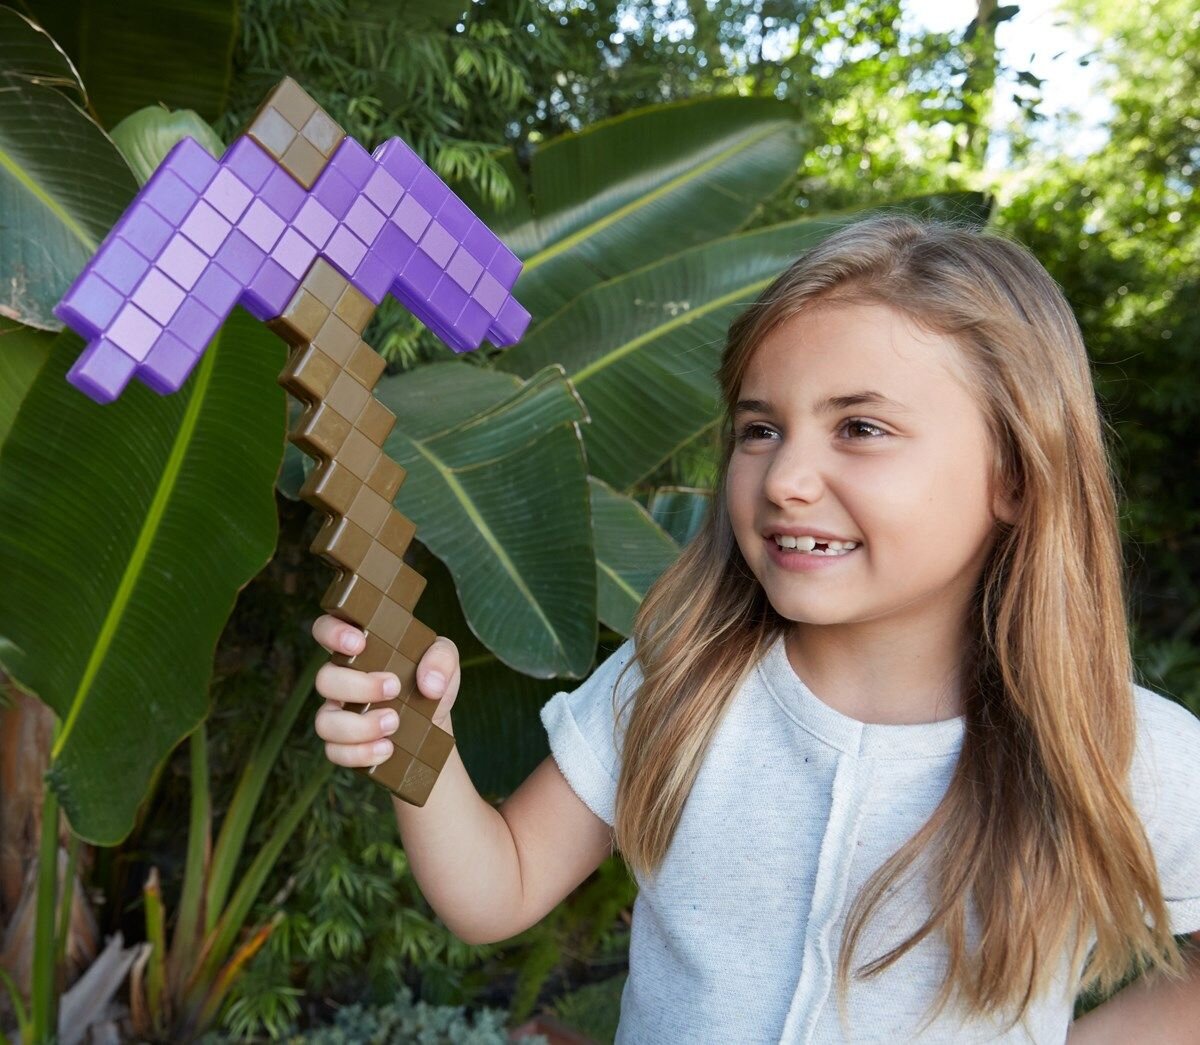 Minecraft, Enchanted Pickaxe Plastic Replica 34 cm